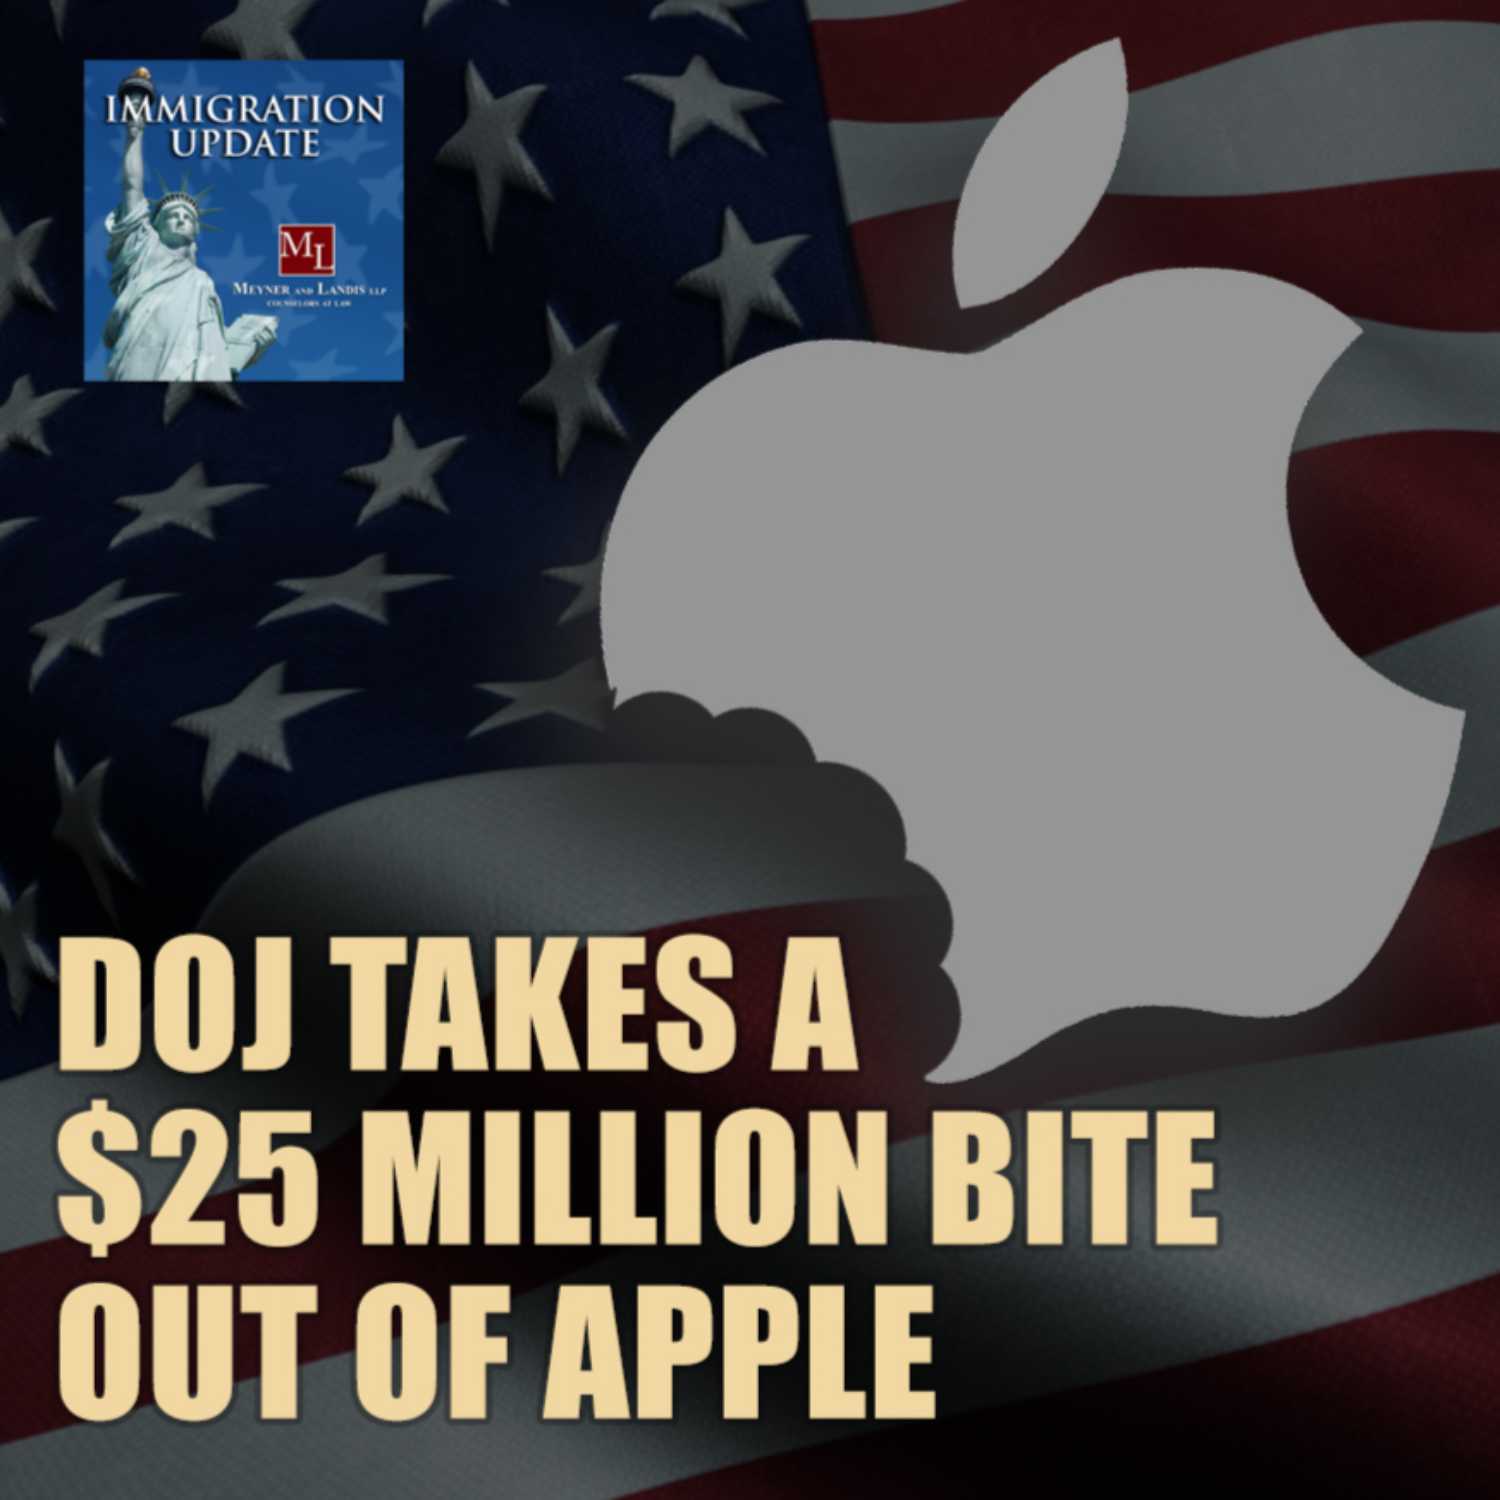 The DOJ Takes a $25 Million Bite Out of Apple